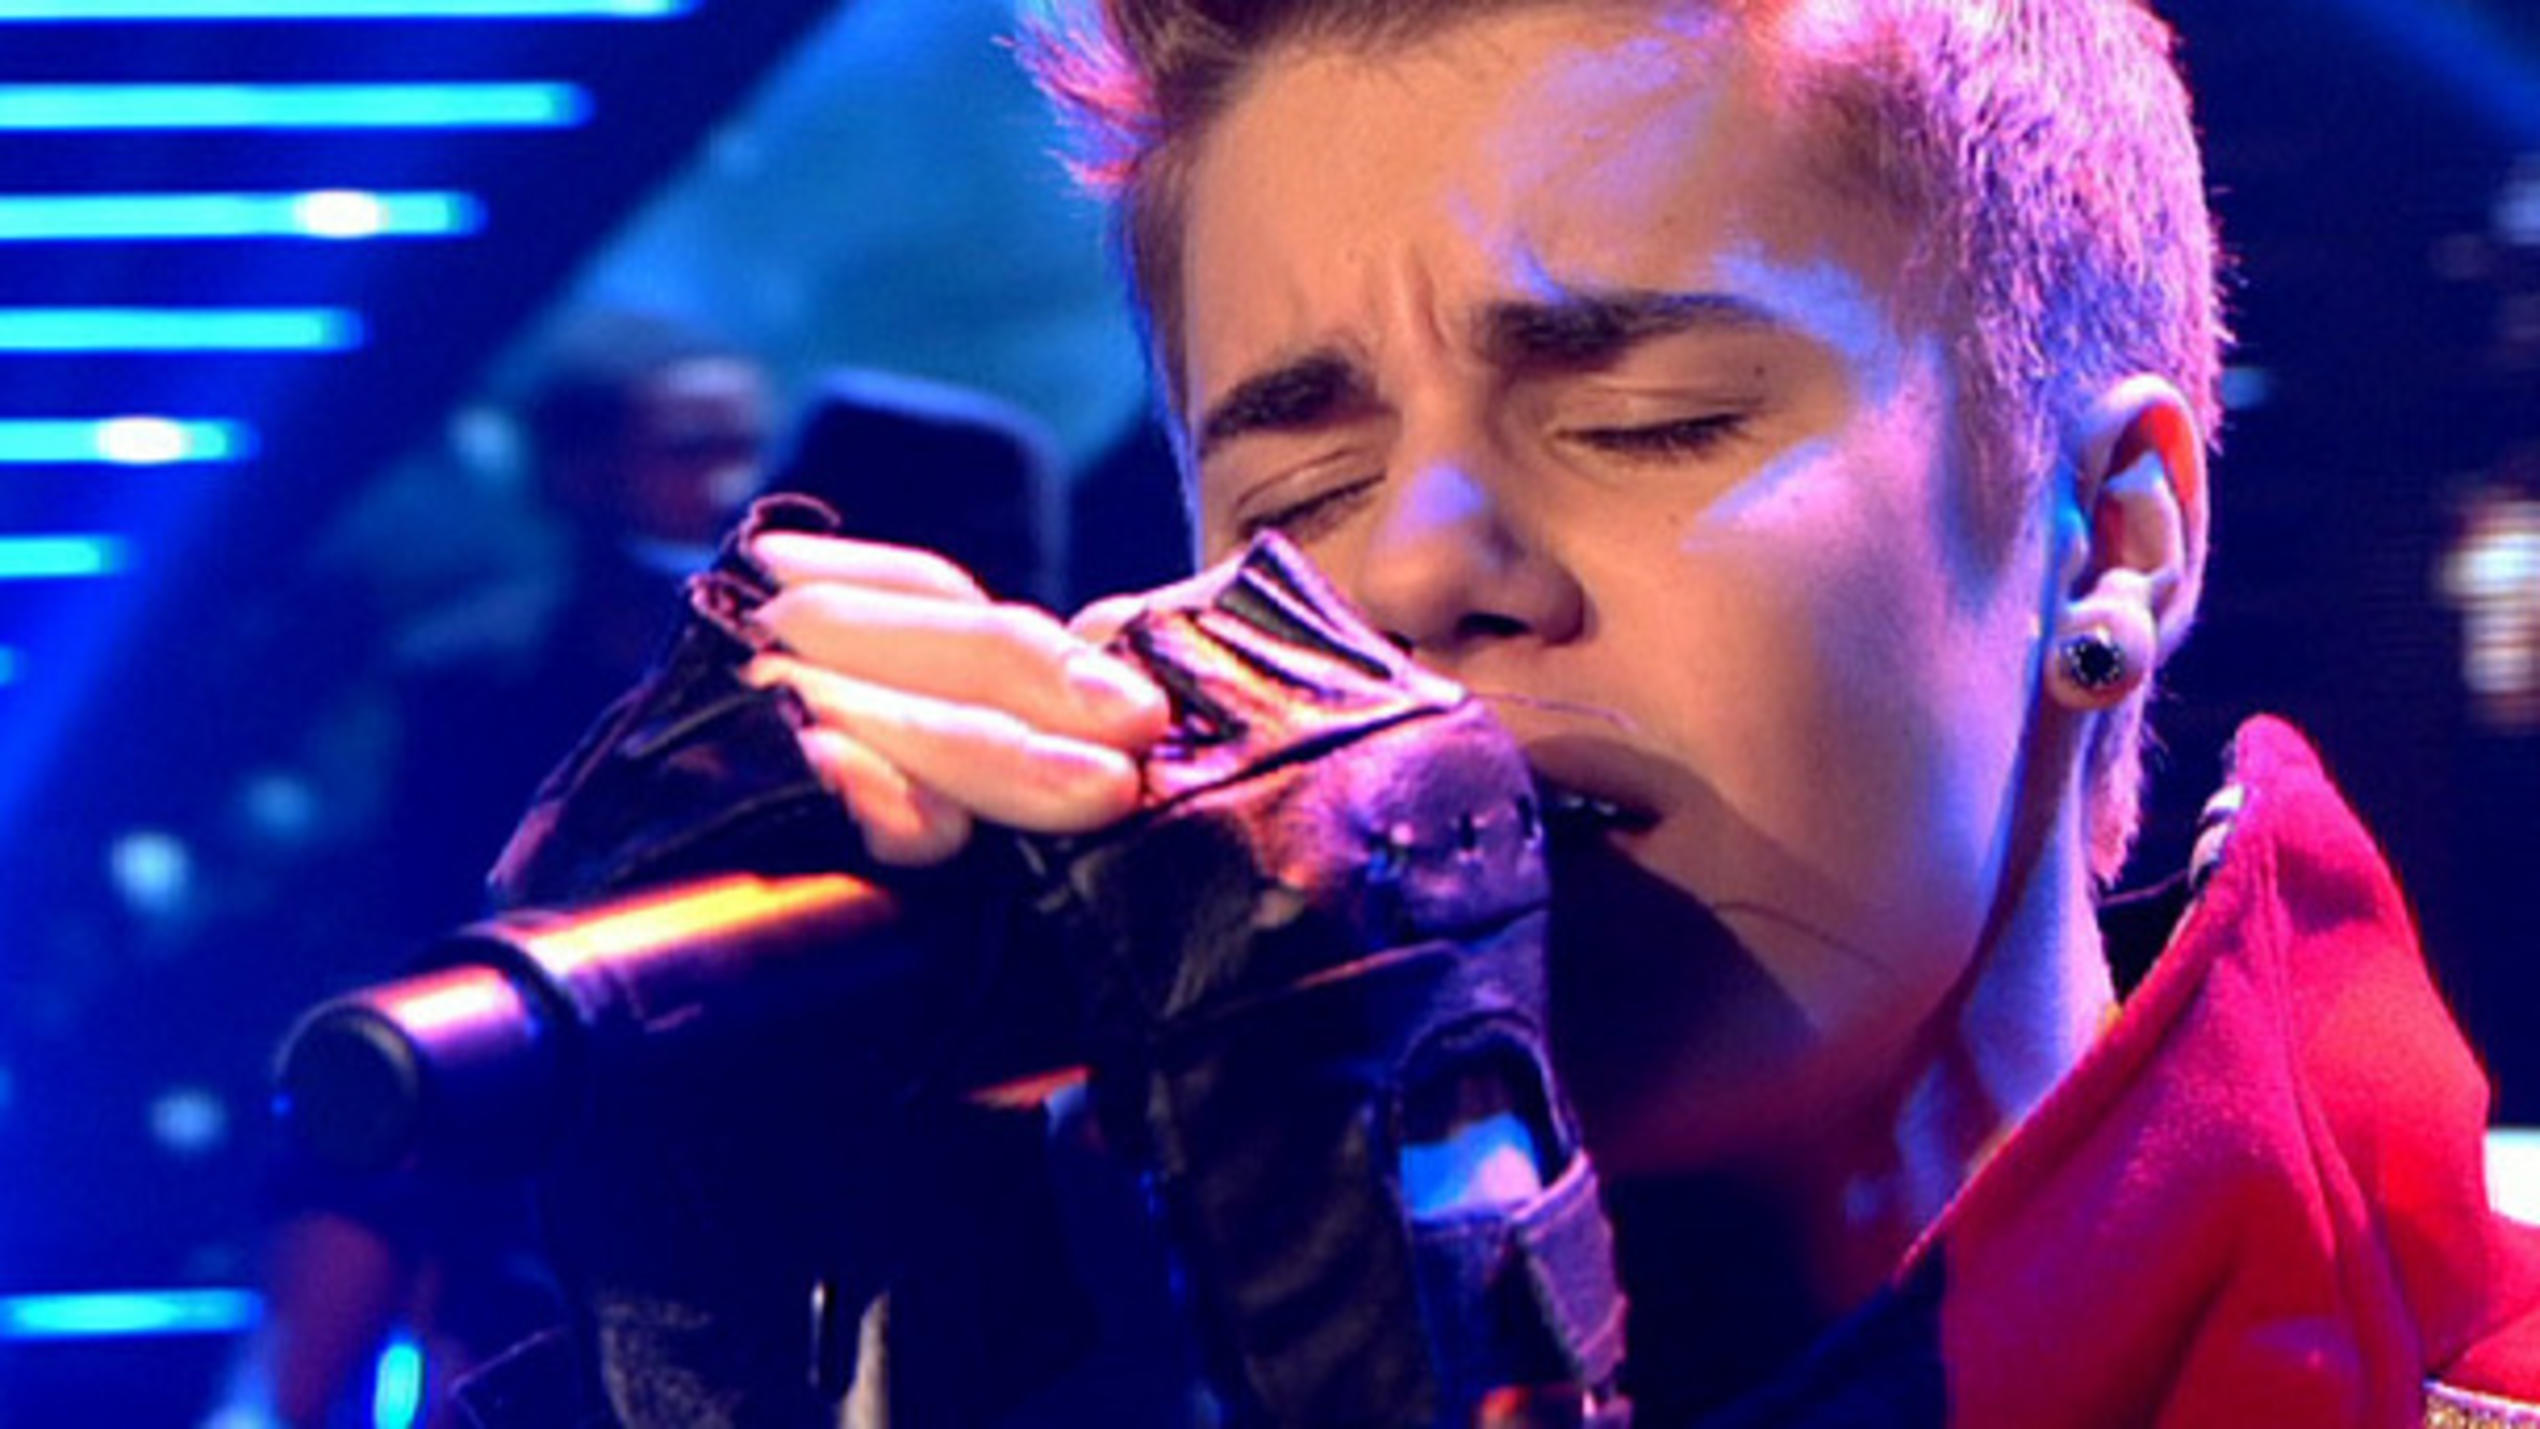 Showact: Justin Bieber singt "Mistletoe"